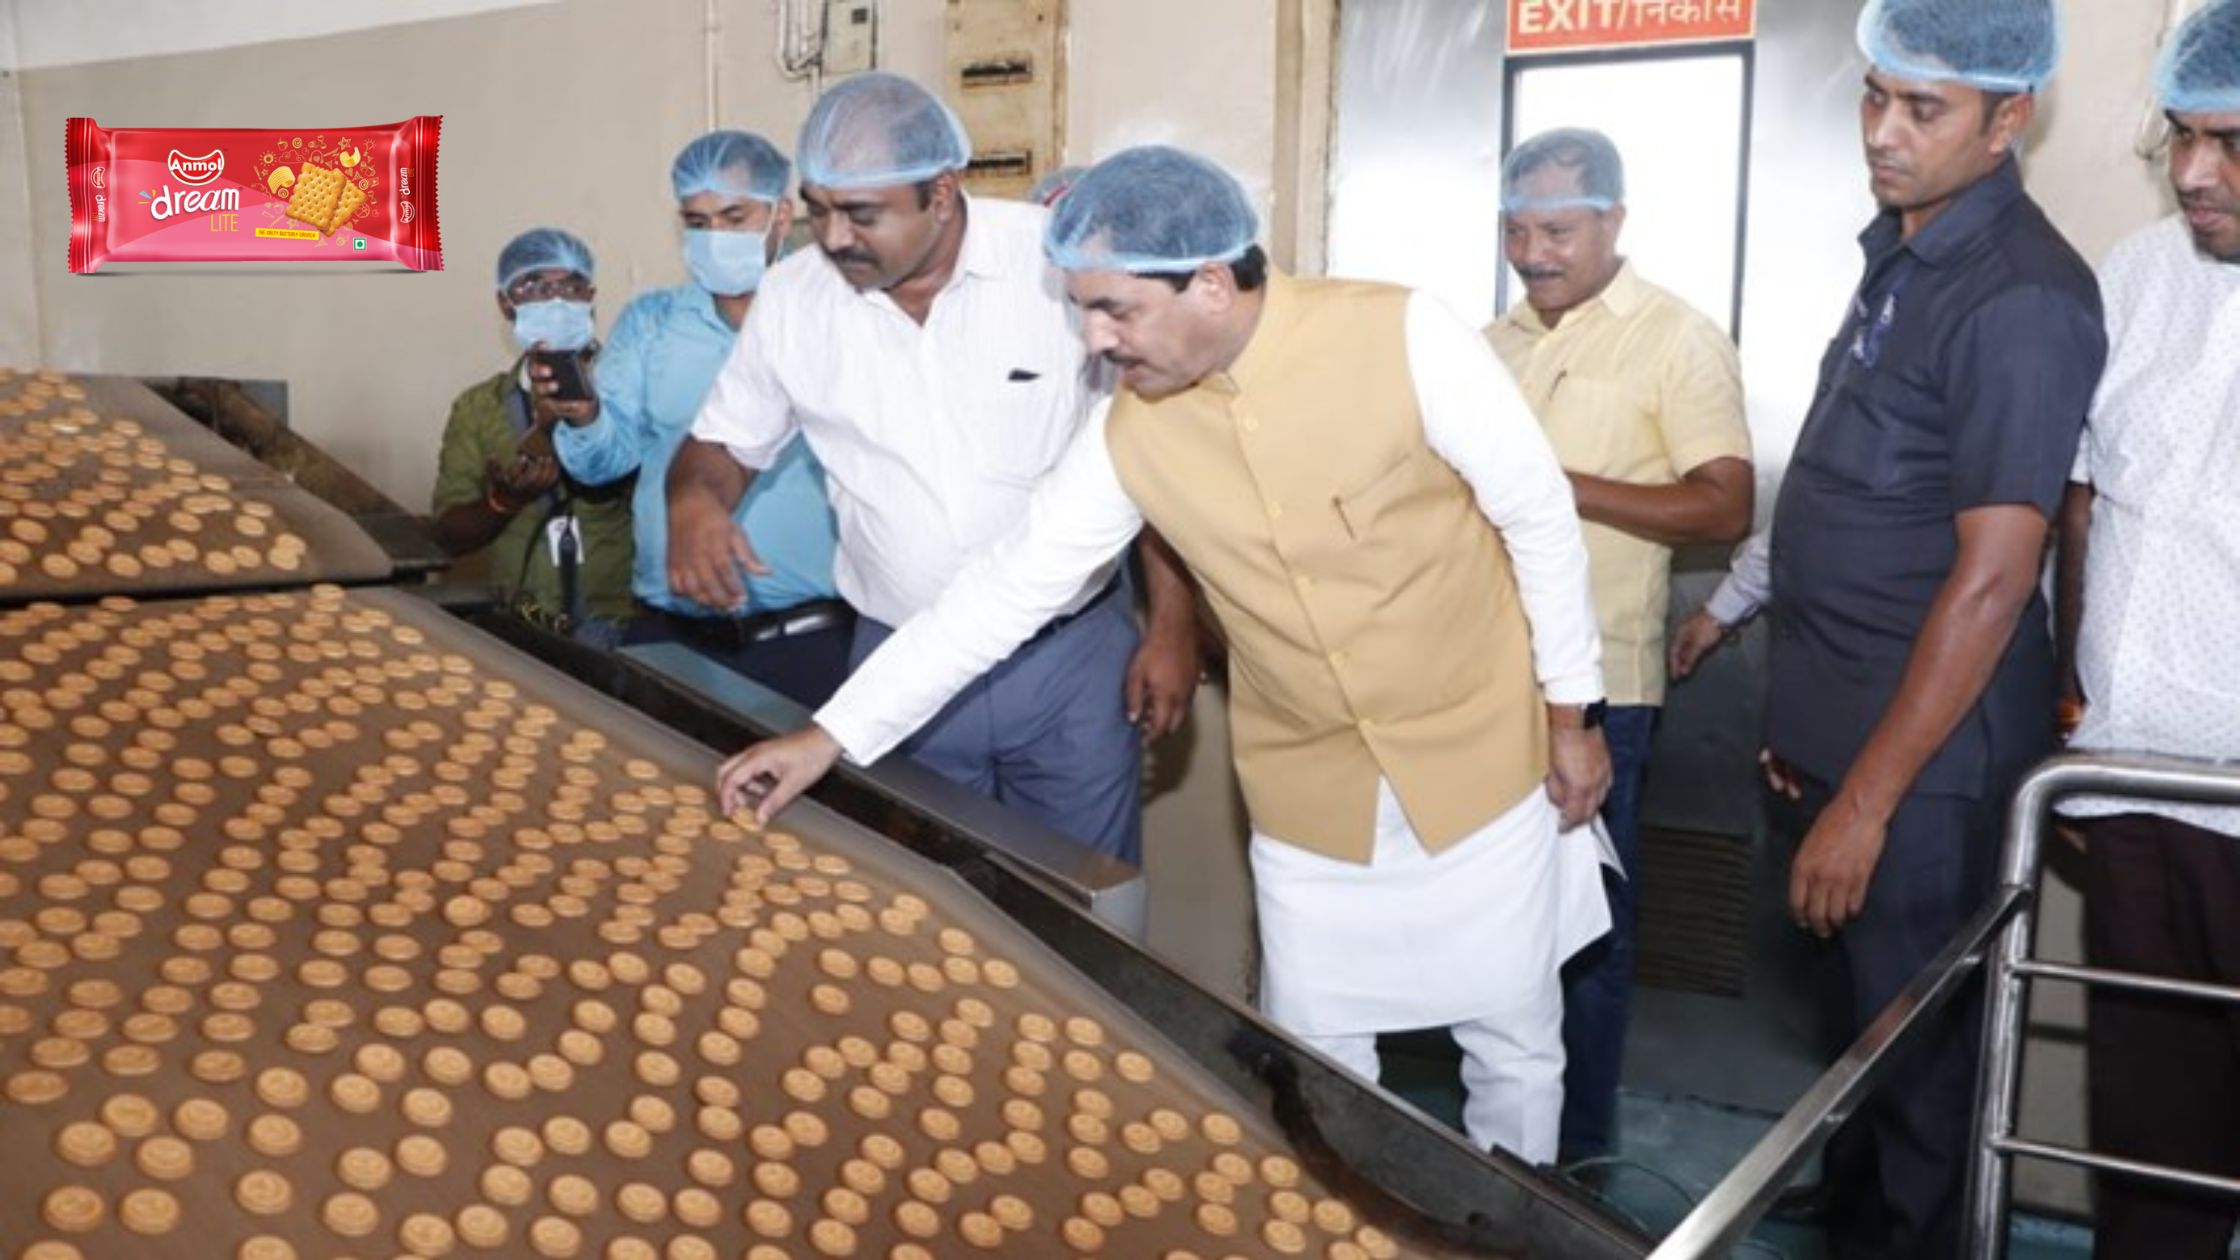 anmol biscuit cake factory will set up in kishanganj